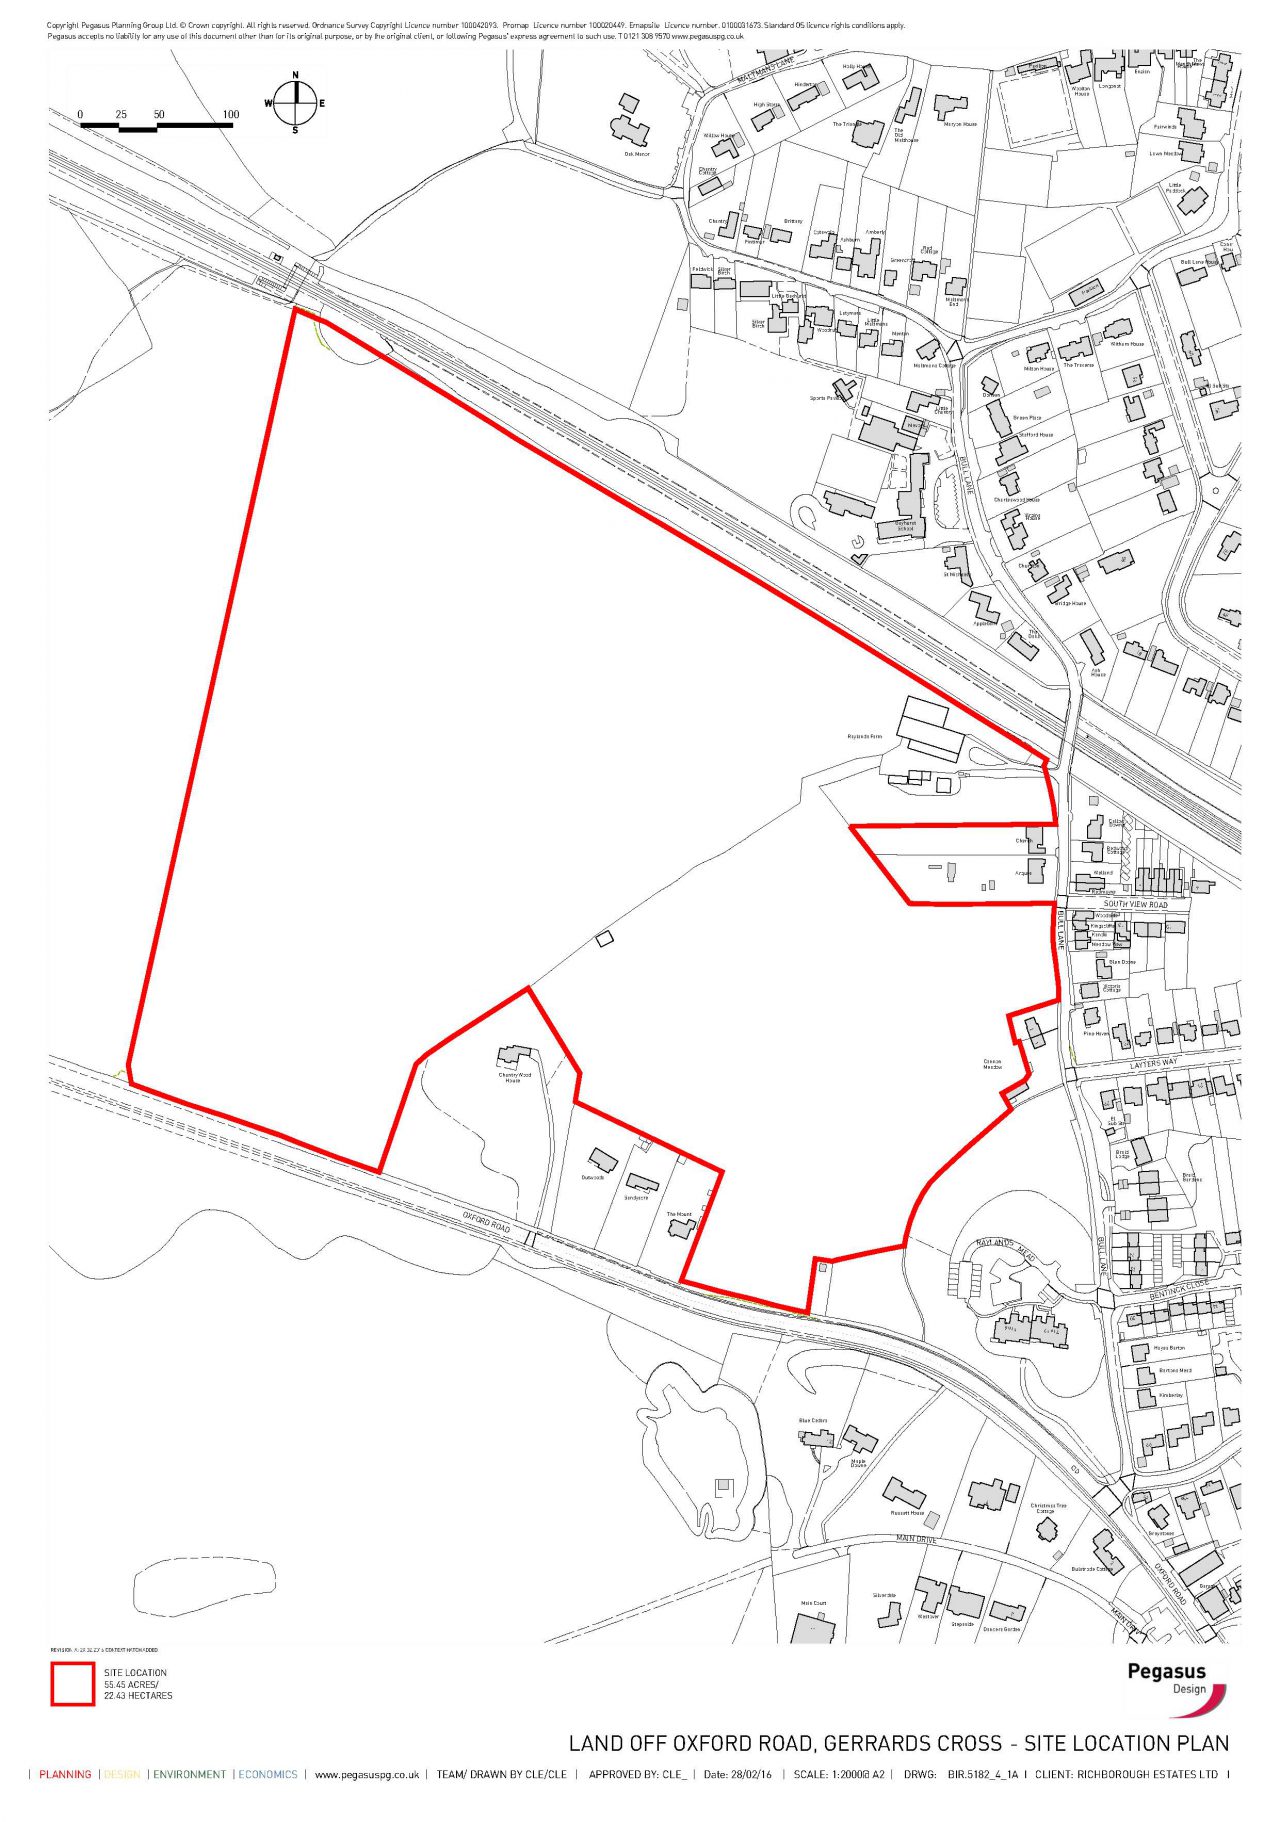 Gerrards Cross site location plan